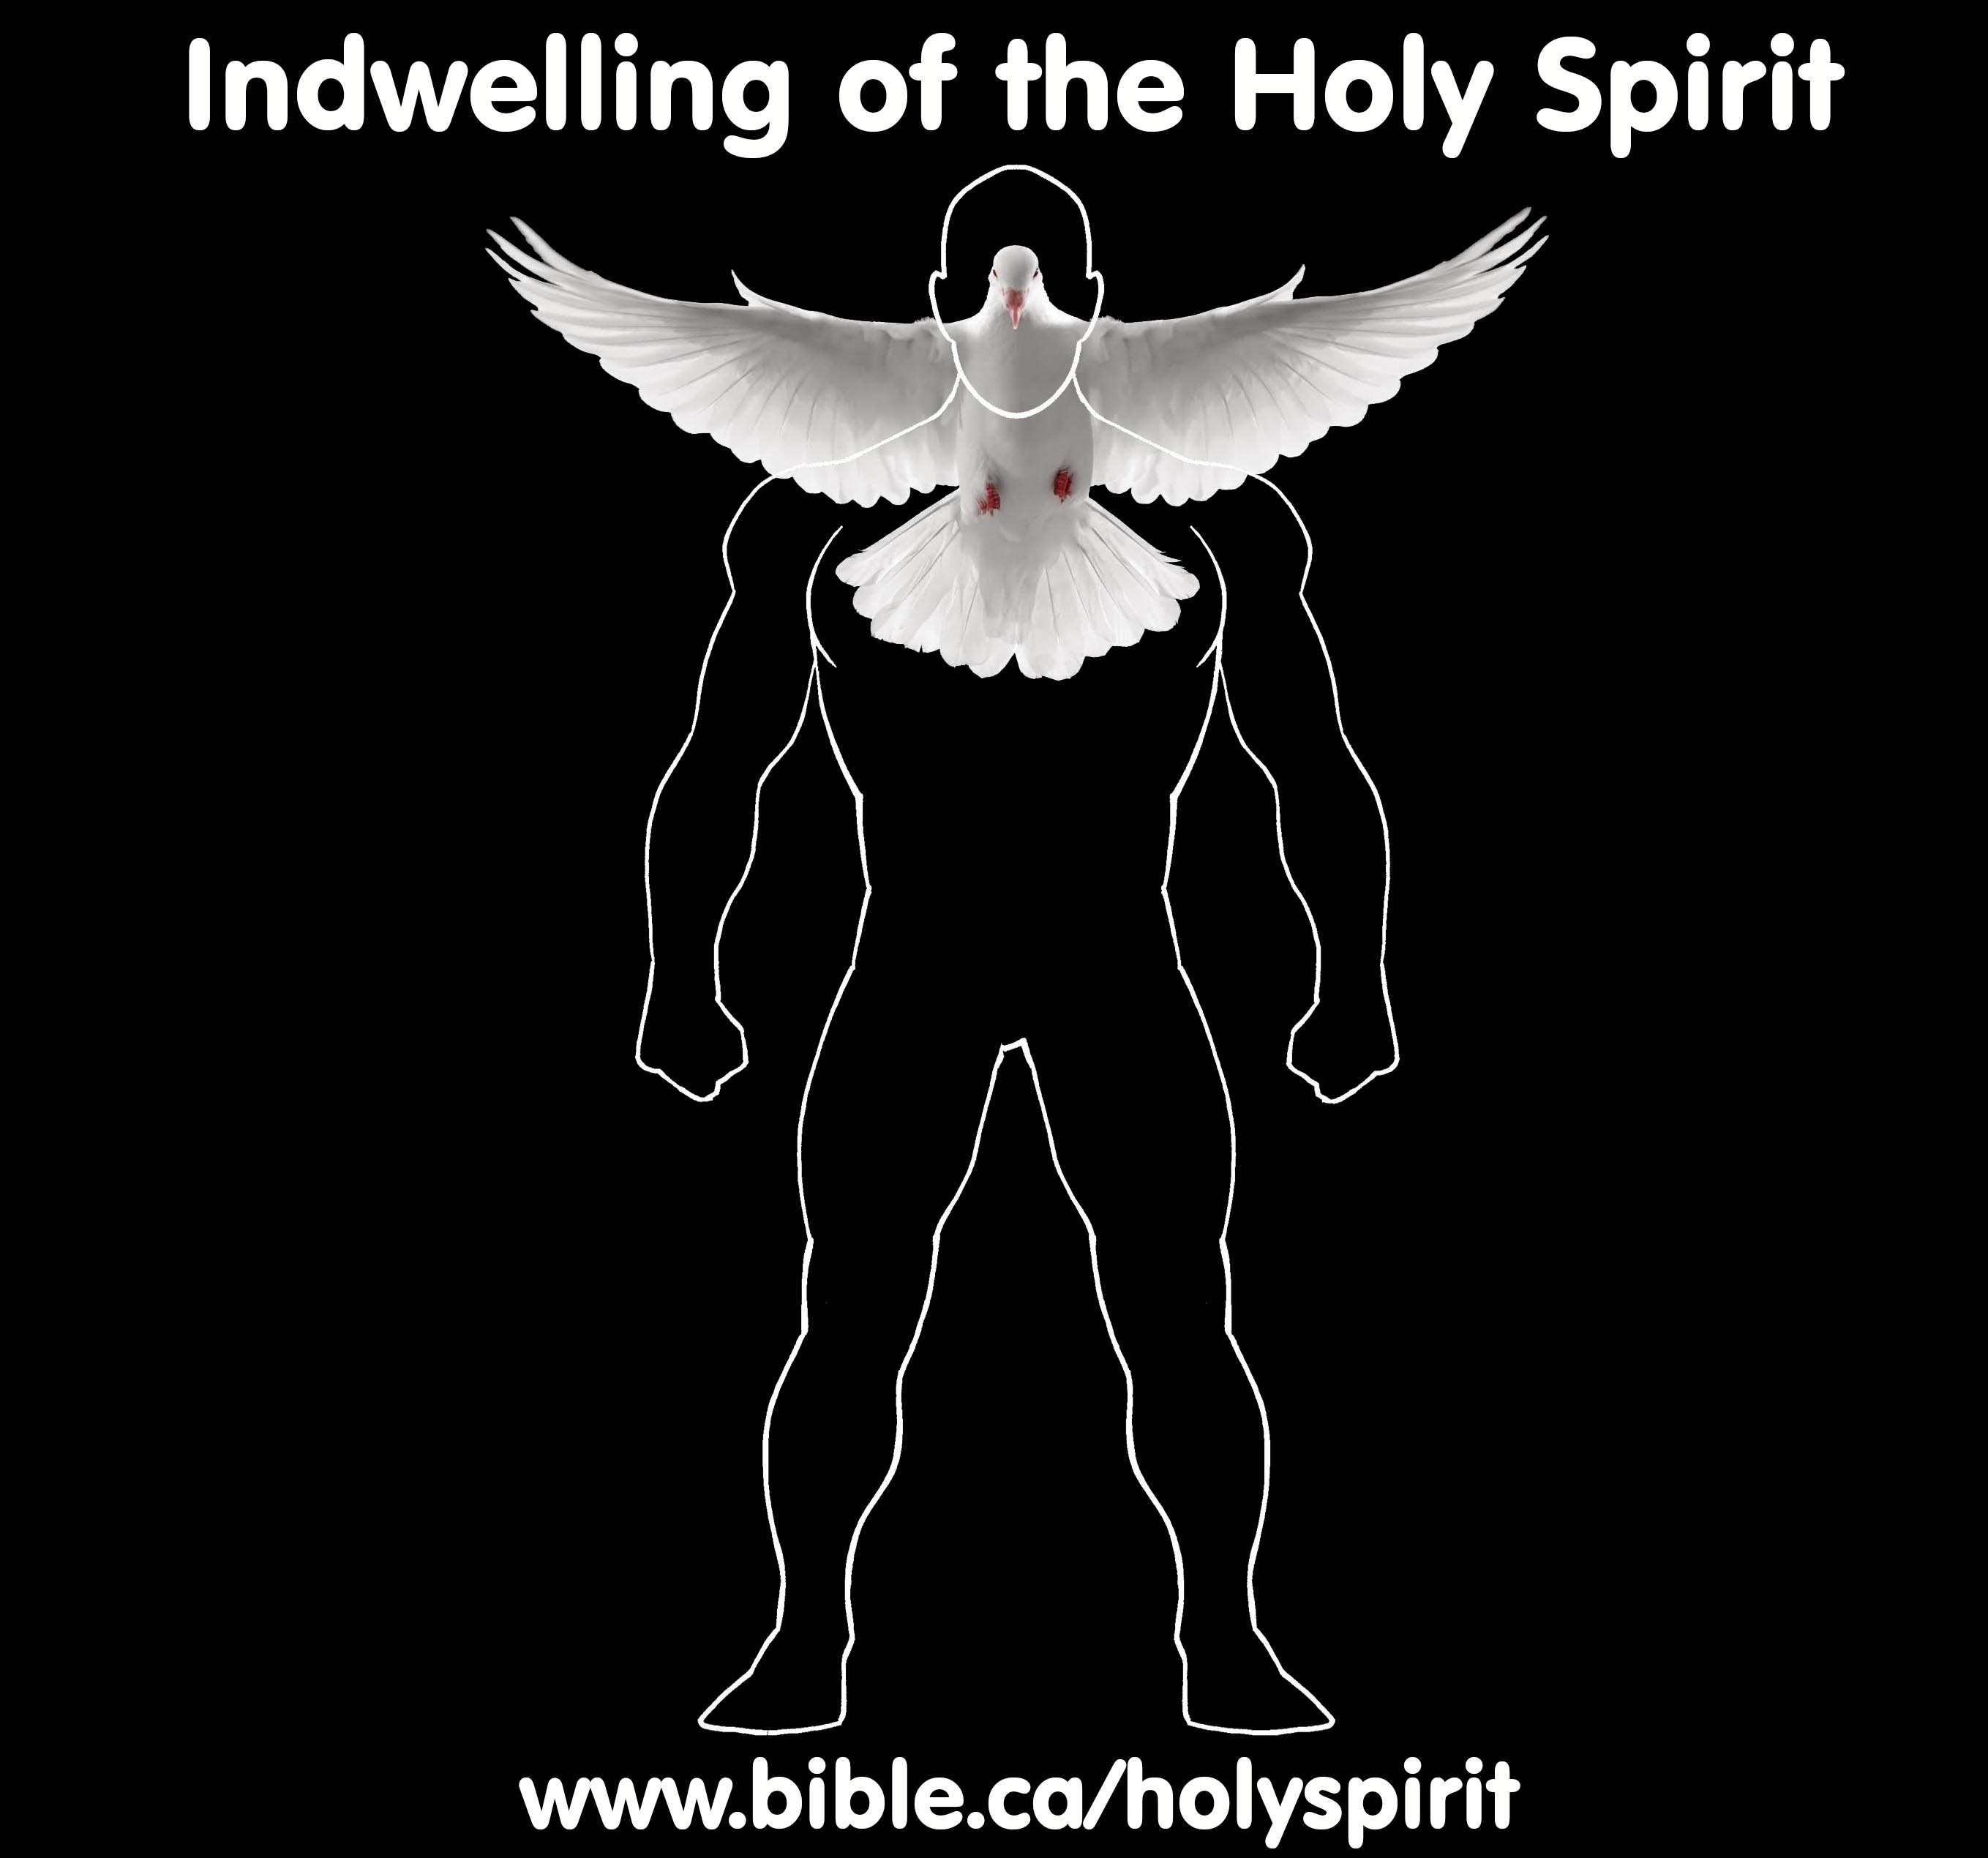 https://www.bible.ca/holyspirit/Holy-Spirit-Indwelling-metaphoric-temple-church-christian-body.jpg